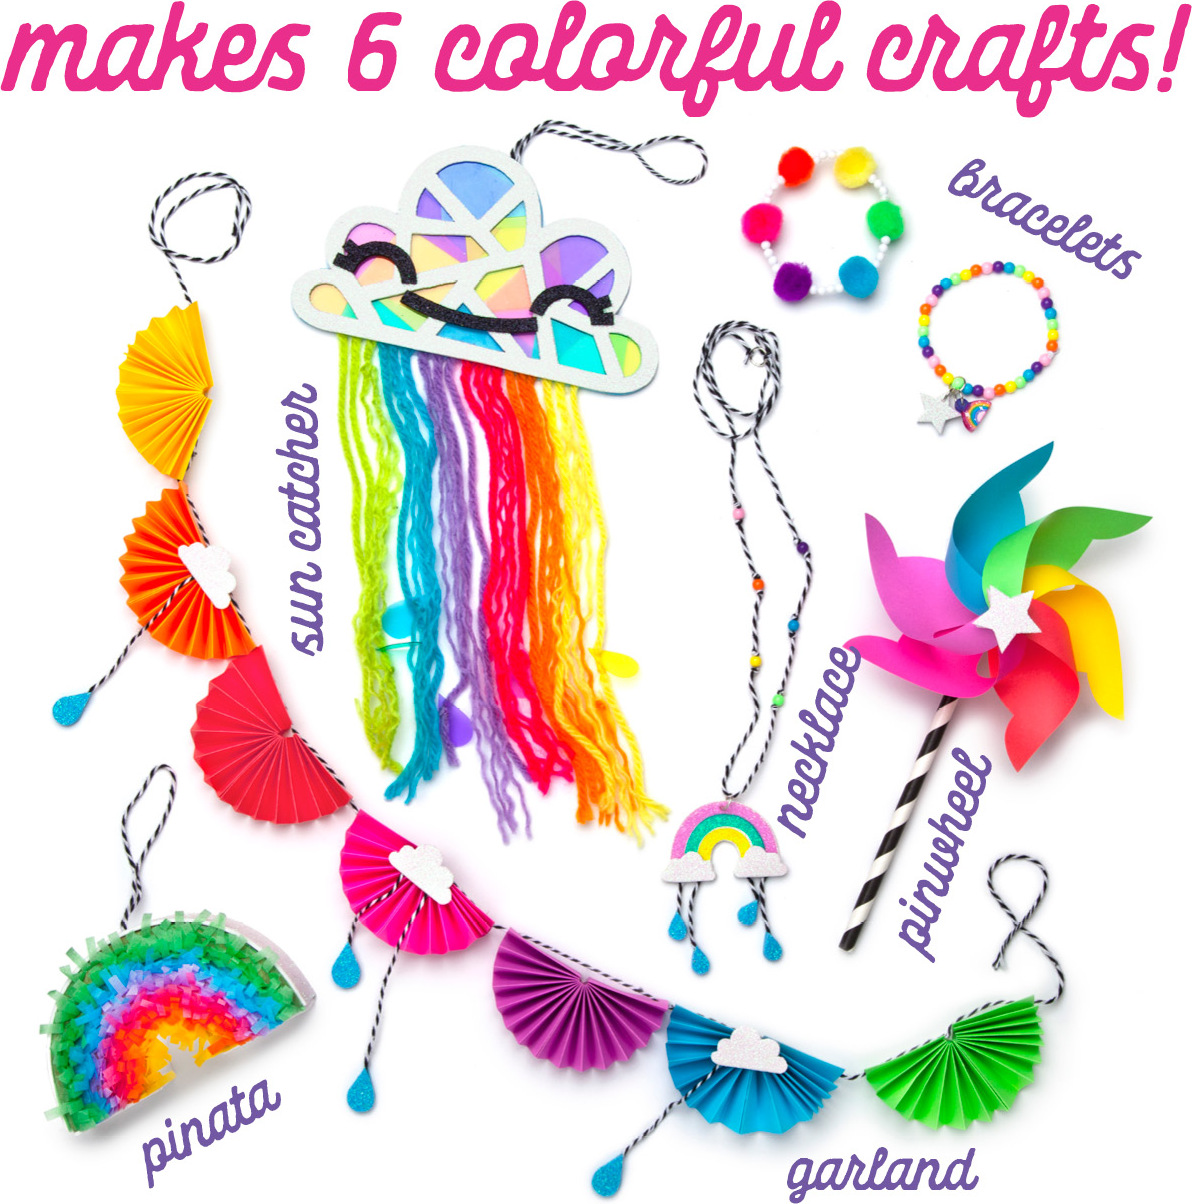 Craft-tastic ‚Äì I Love Rainbows Craft Kit ‚Äì Make 6 Colorful Arts & Crafts Projects & Äì I Love Mermaids Kit ‚Äì Craft Kit Includes 6 Mermaid-Themed Projects 